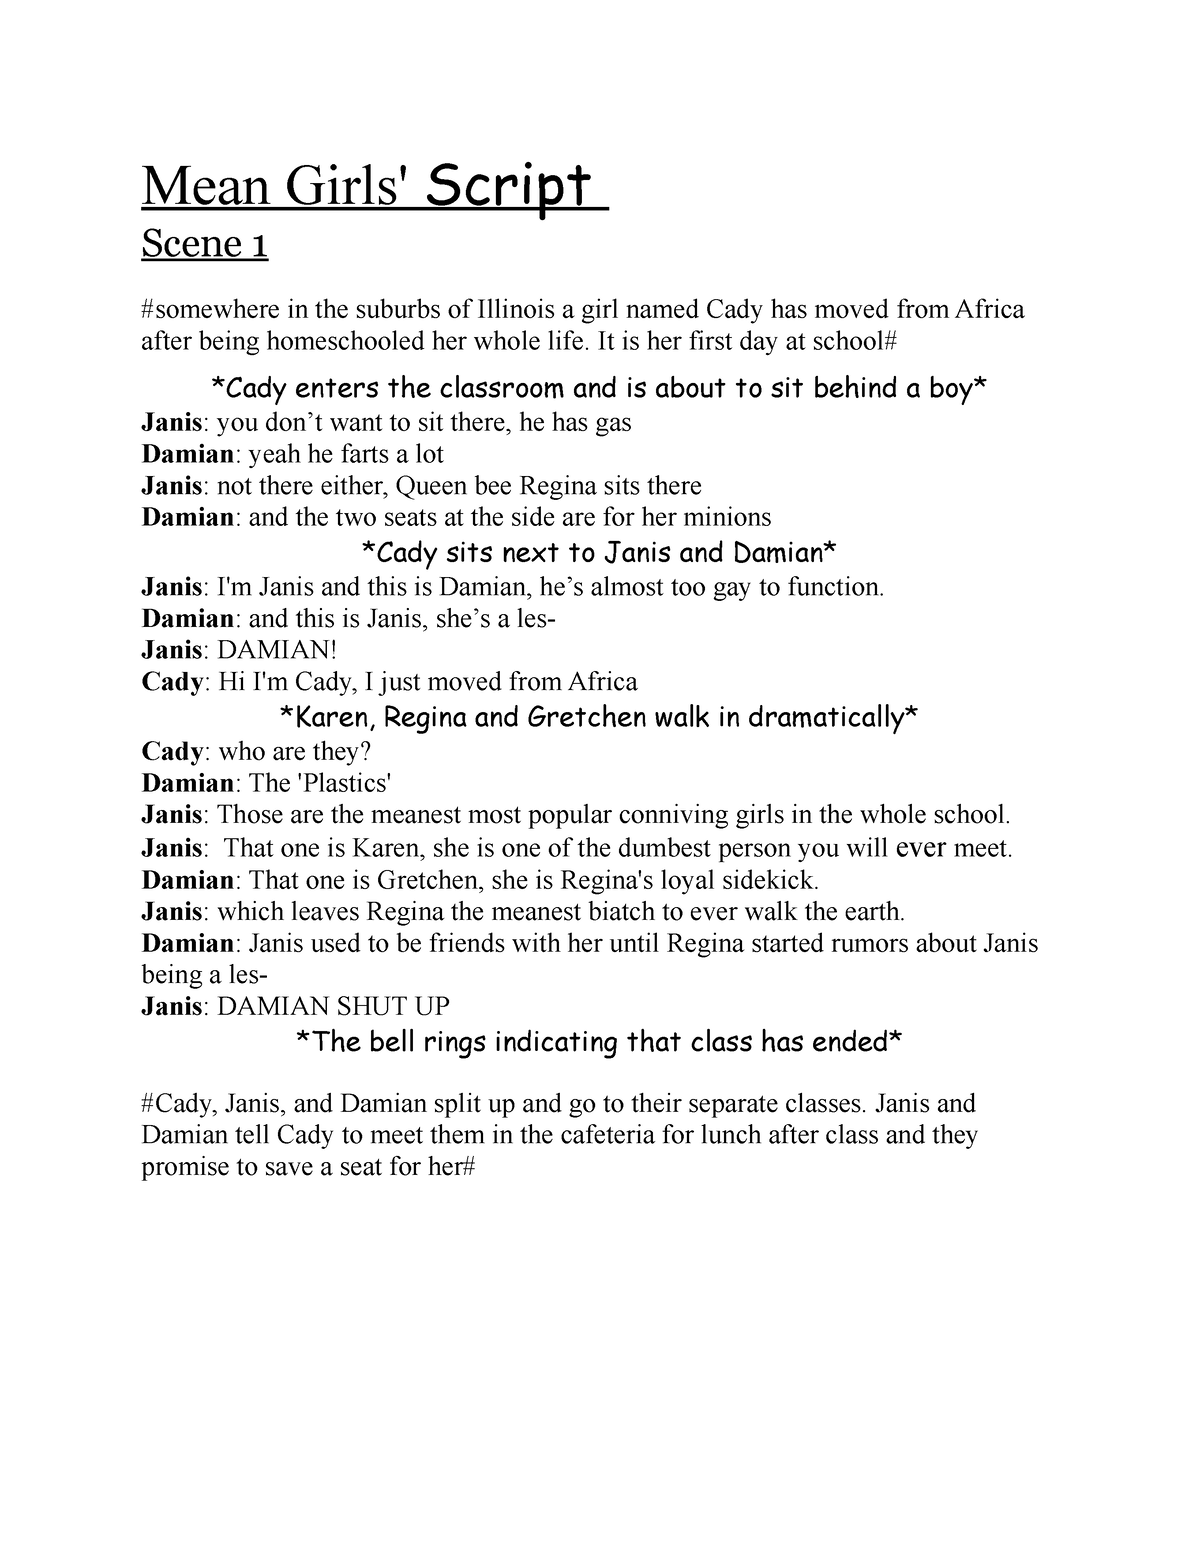 Mean Girls Script Mean Girls Script Scene 1 Somewhere - vrogue.co